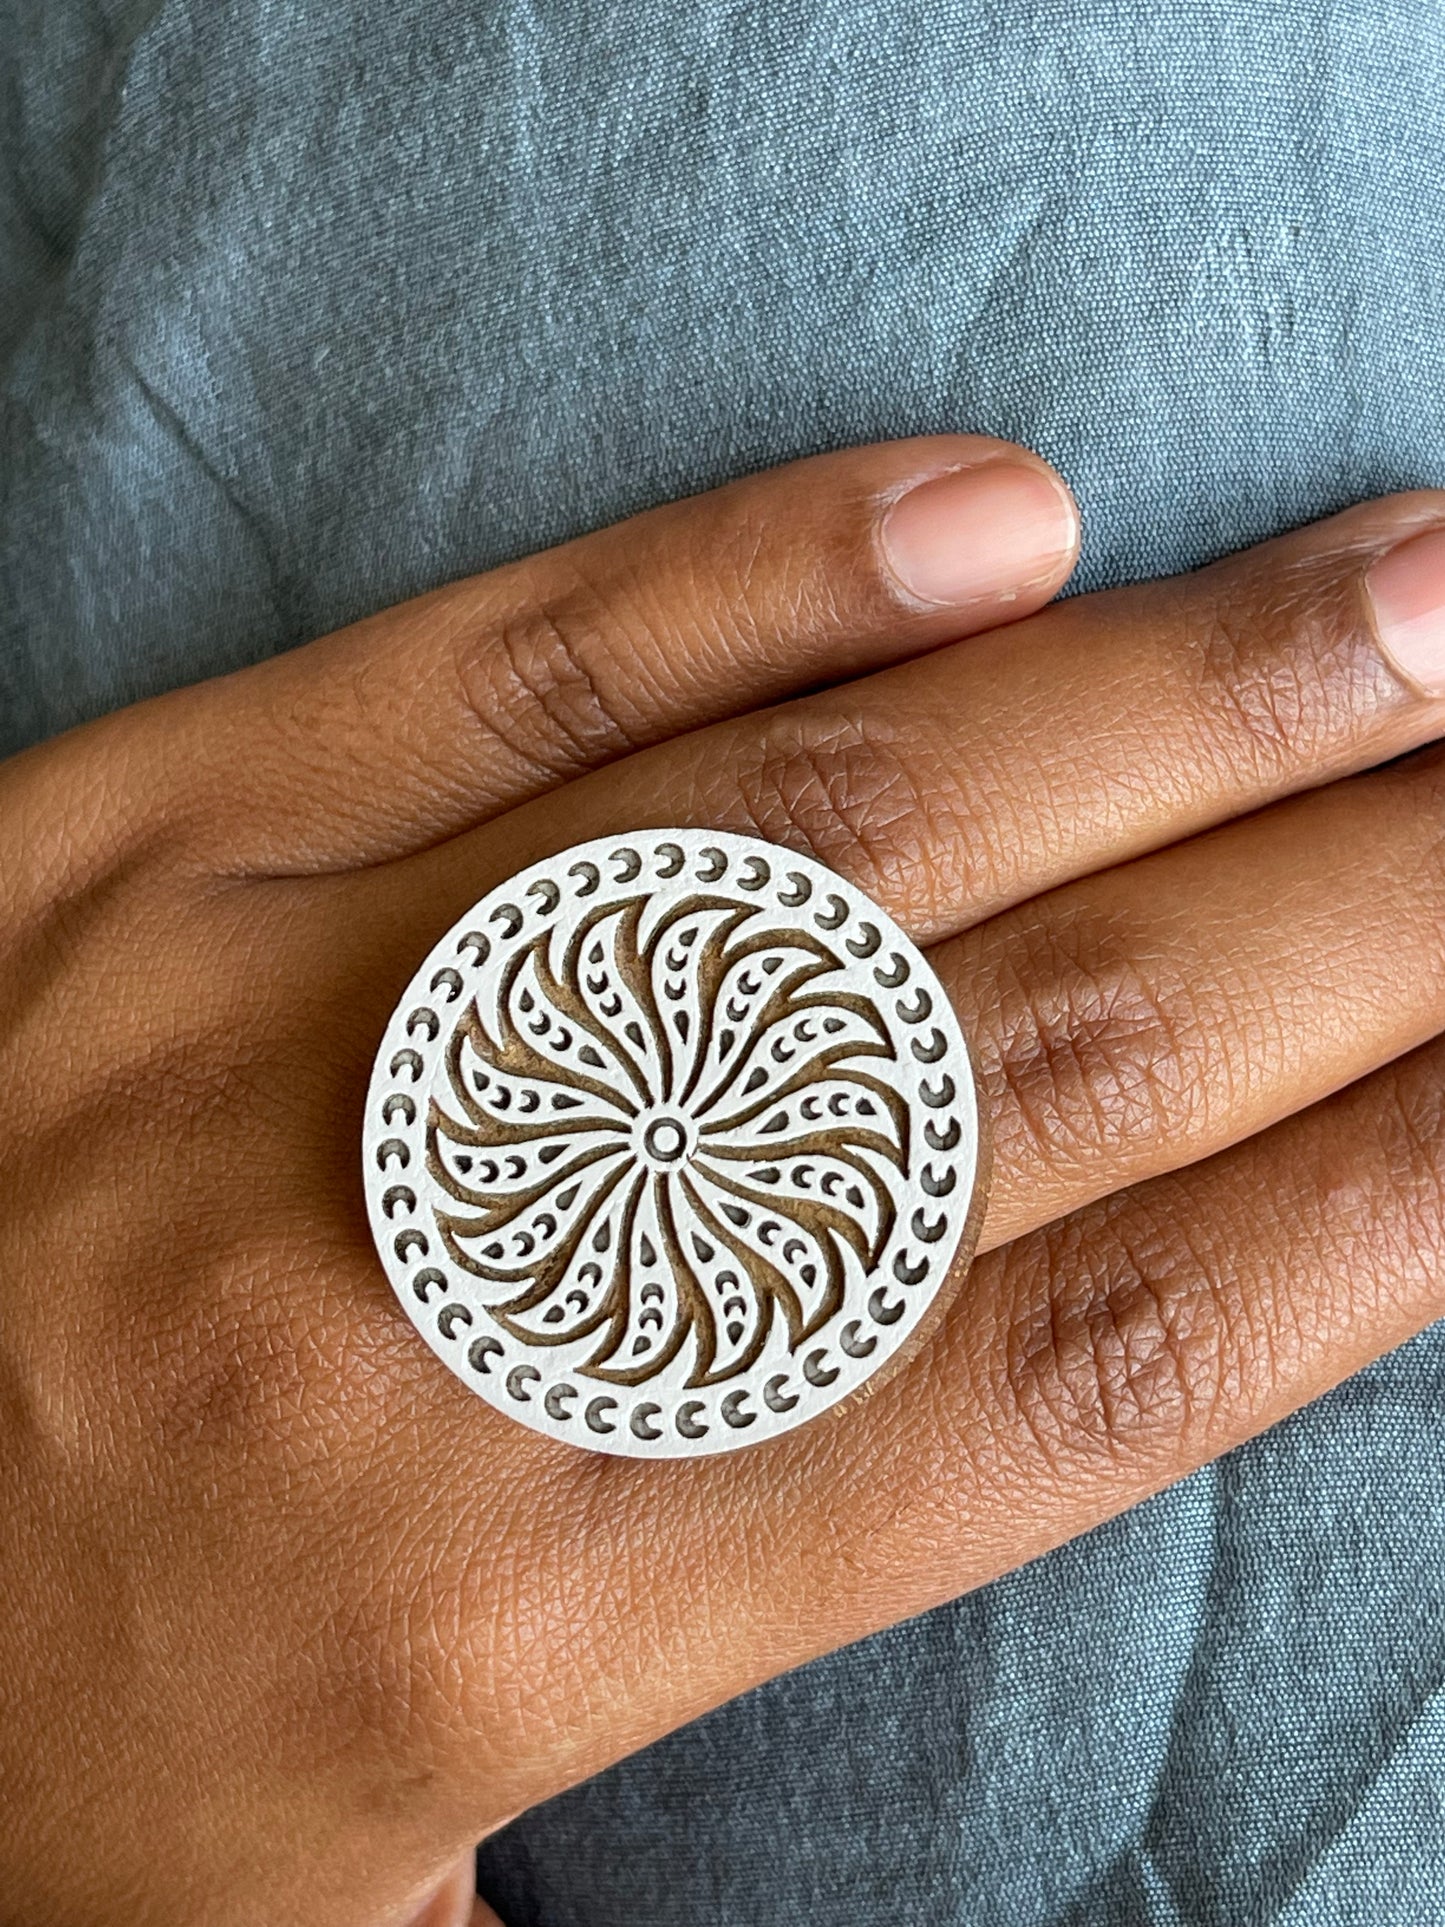 Flower / wheel design wooden block carved handmade adjustable size finger ring